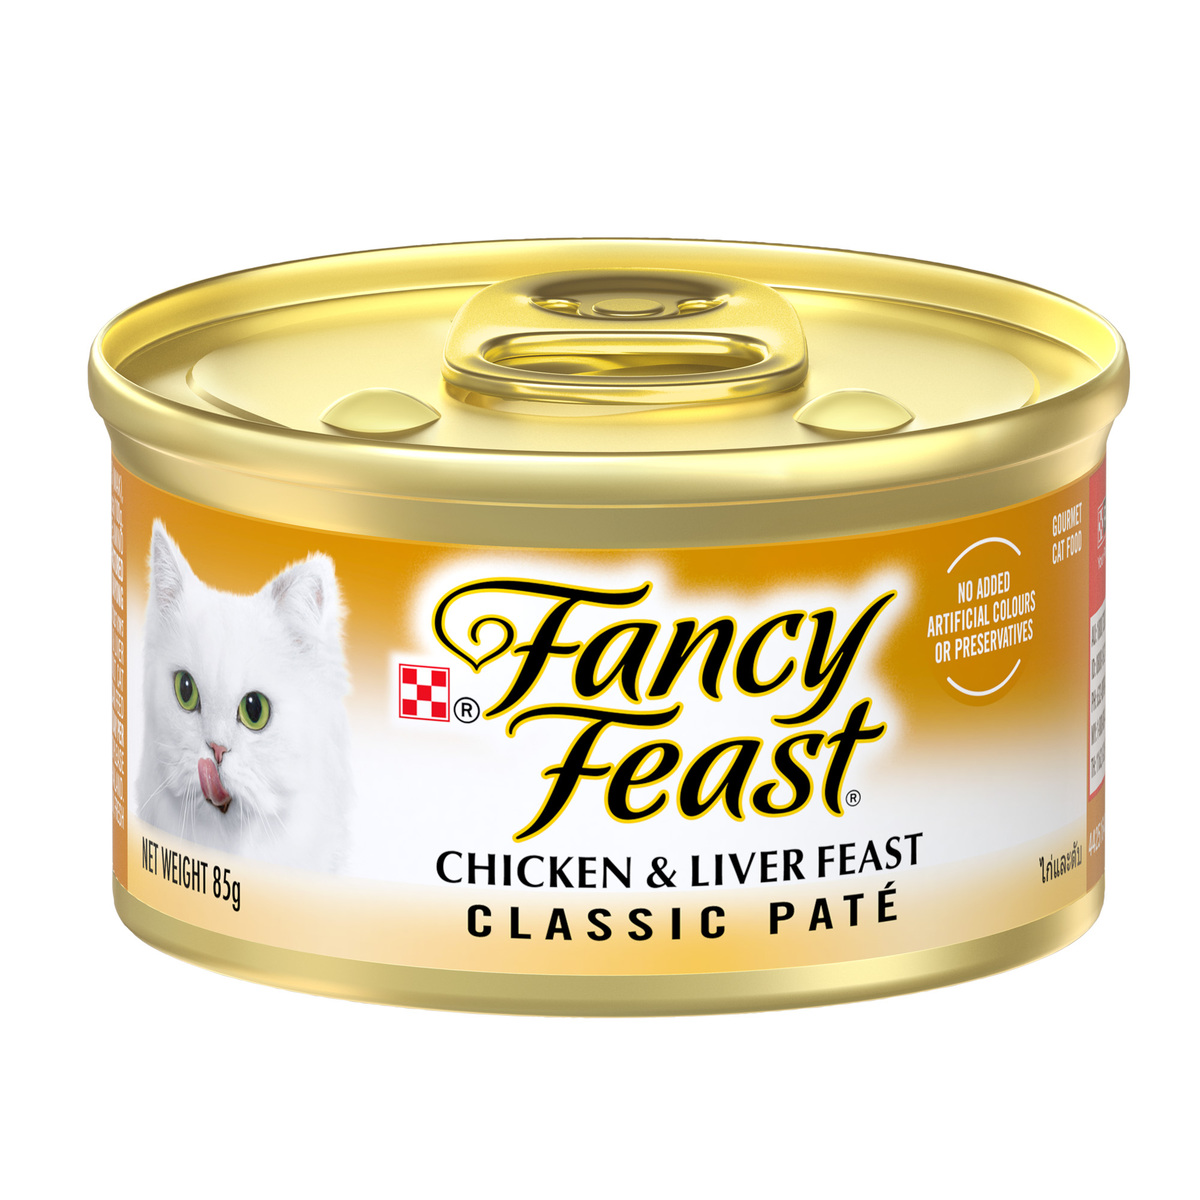 Purina Fancy Feast Classic Pate Chicken & Liver Feast 85 g